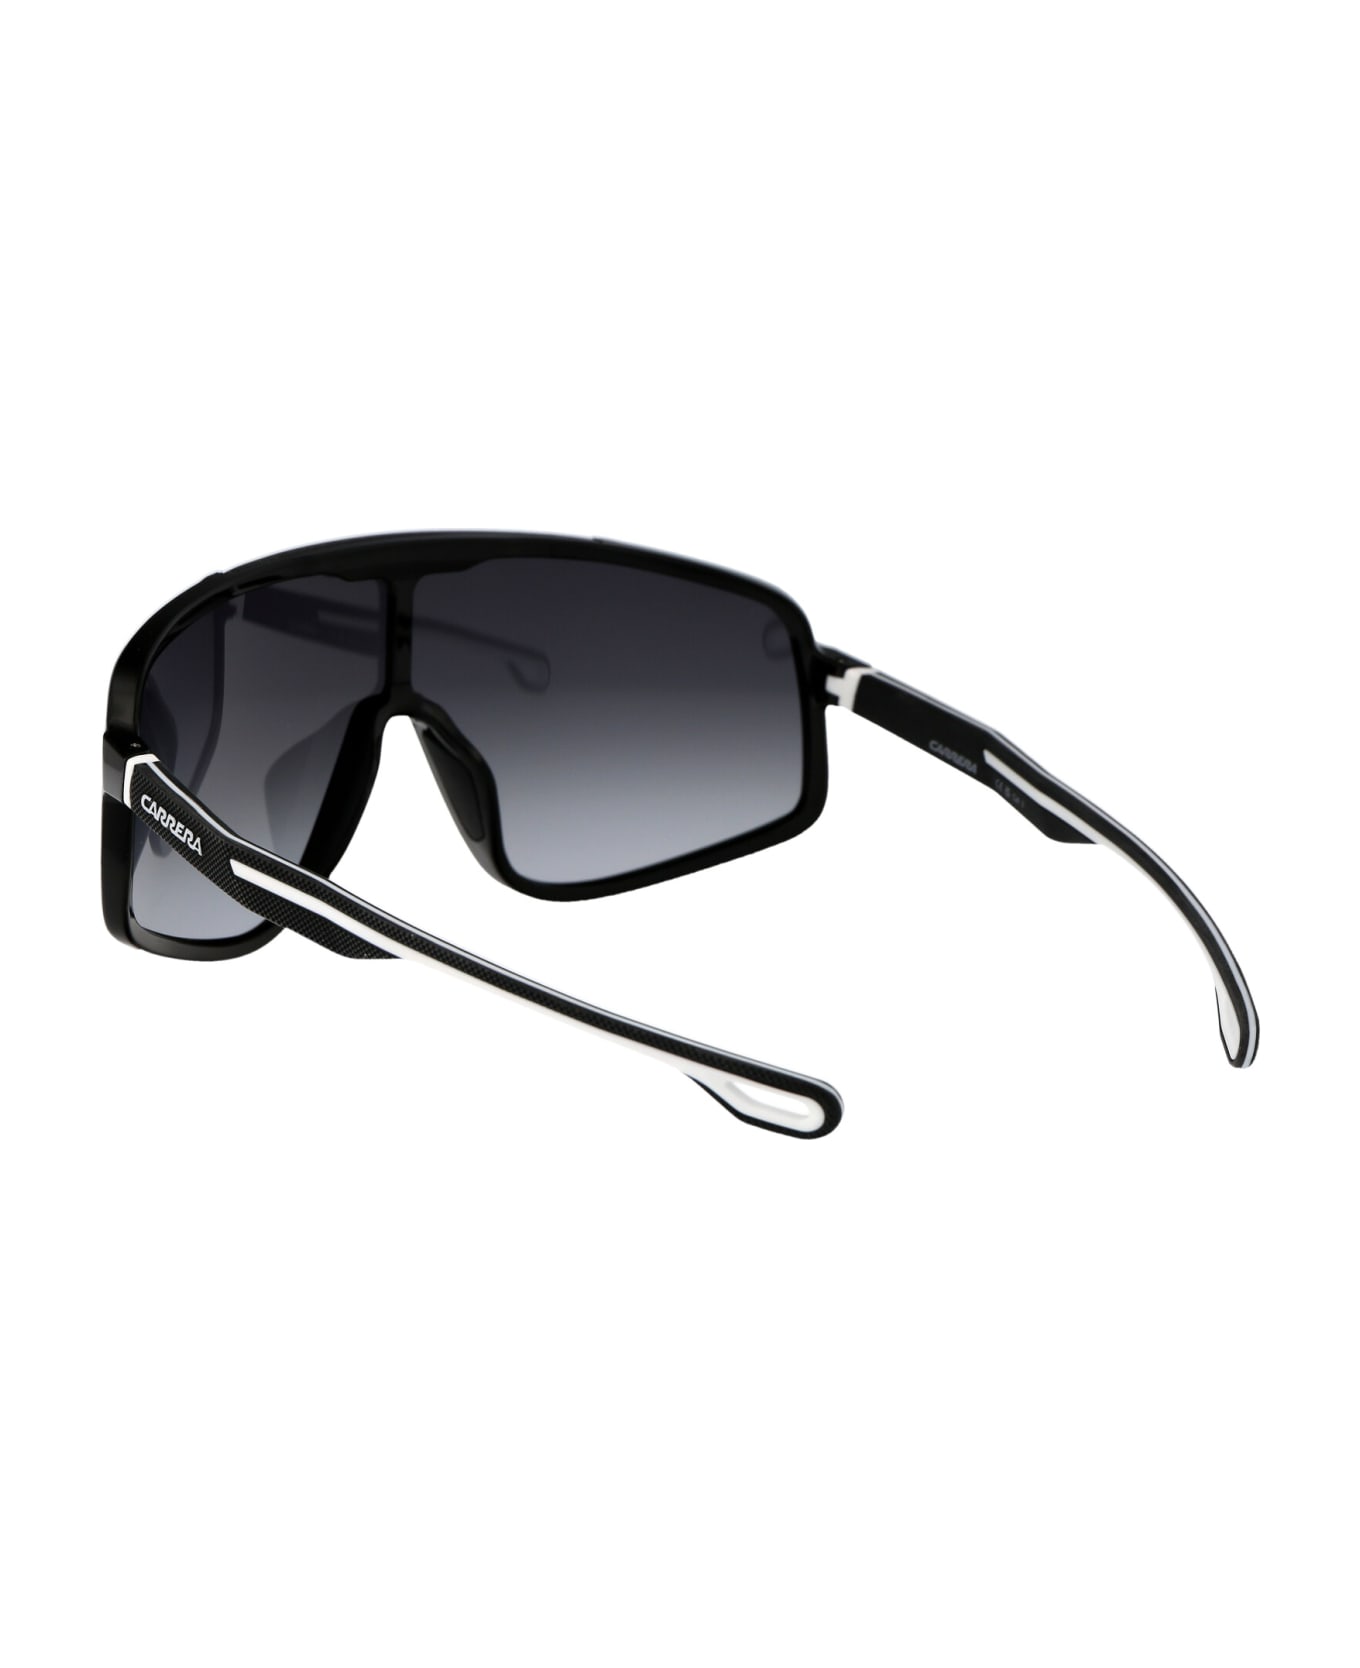 Carrera 4017/s Sunglasses - 8079O BLACK